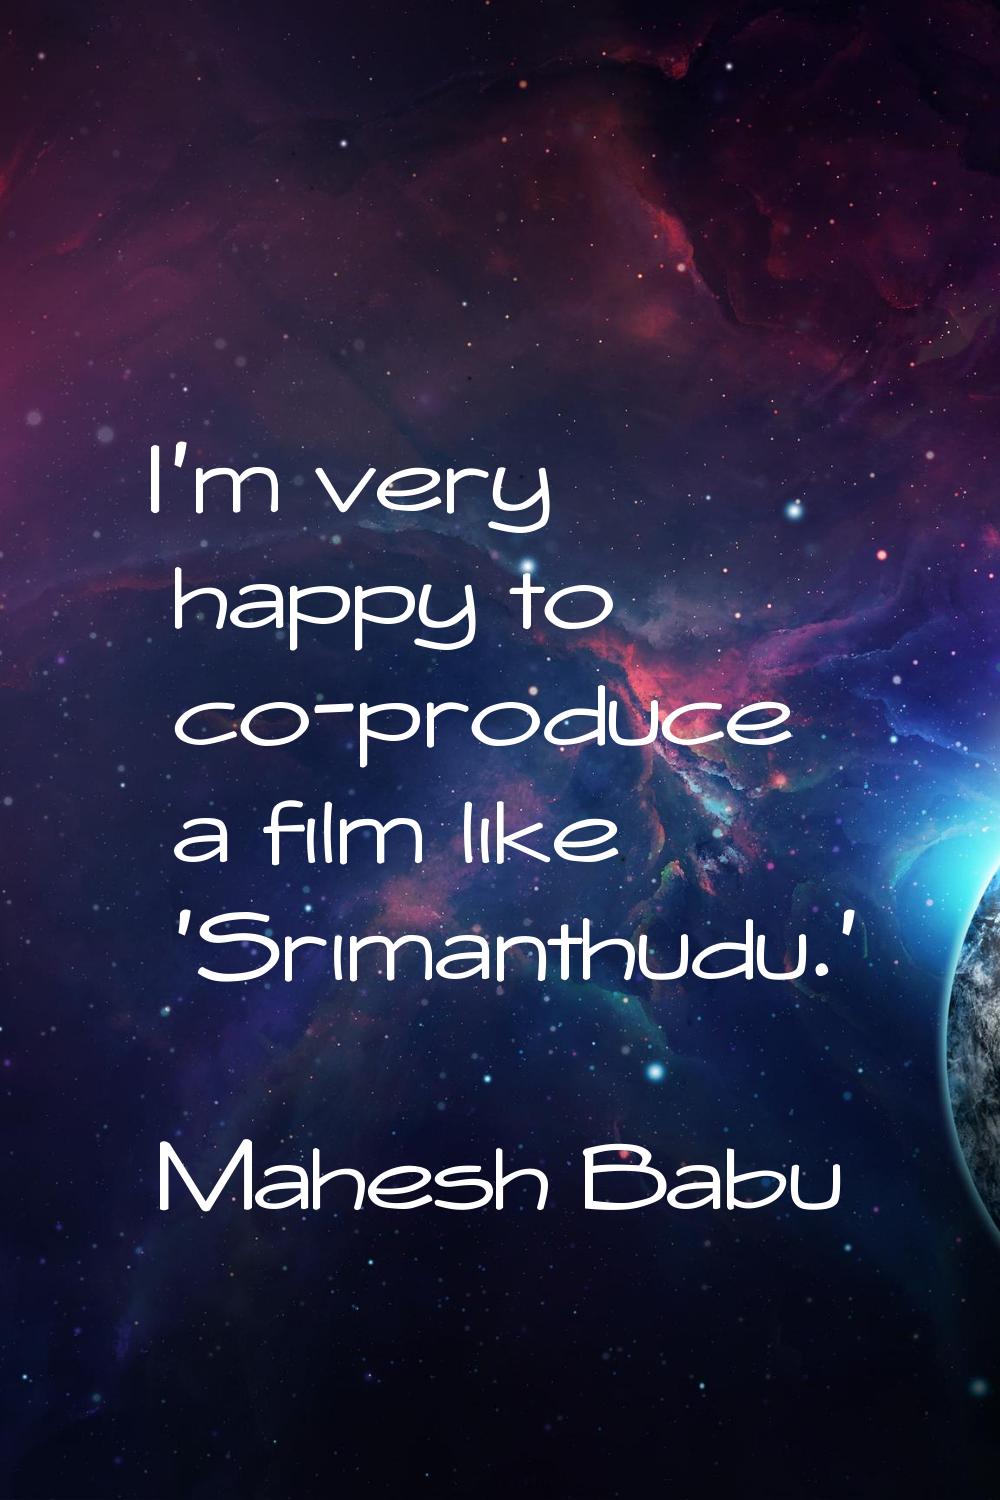 I'm very happy to co-produce a film like 'Srimanthudu.'